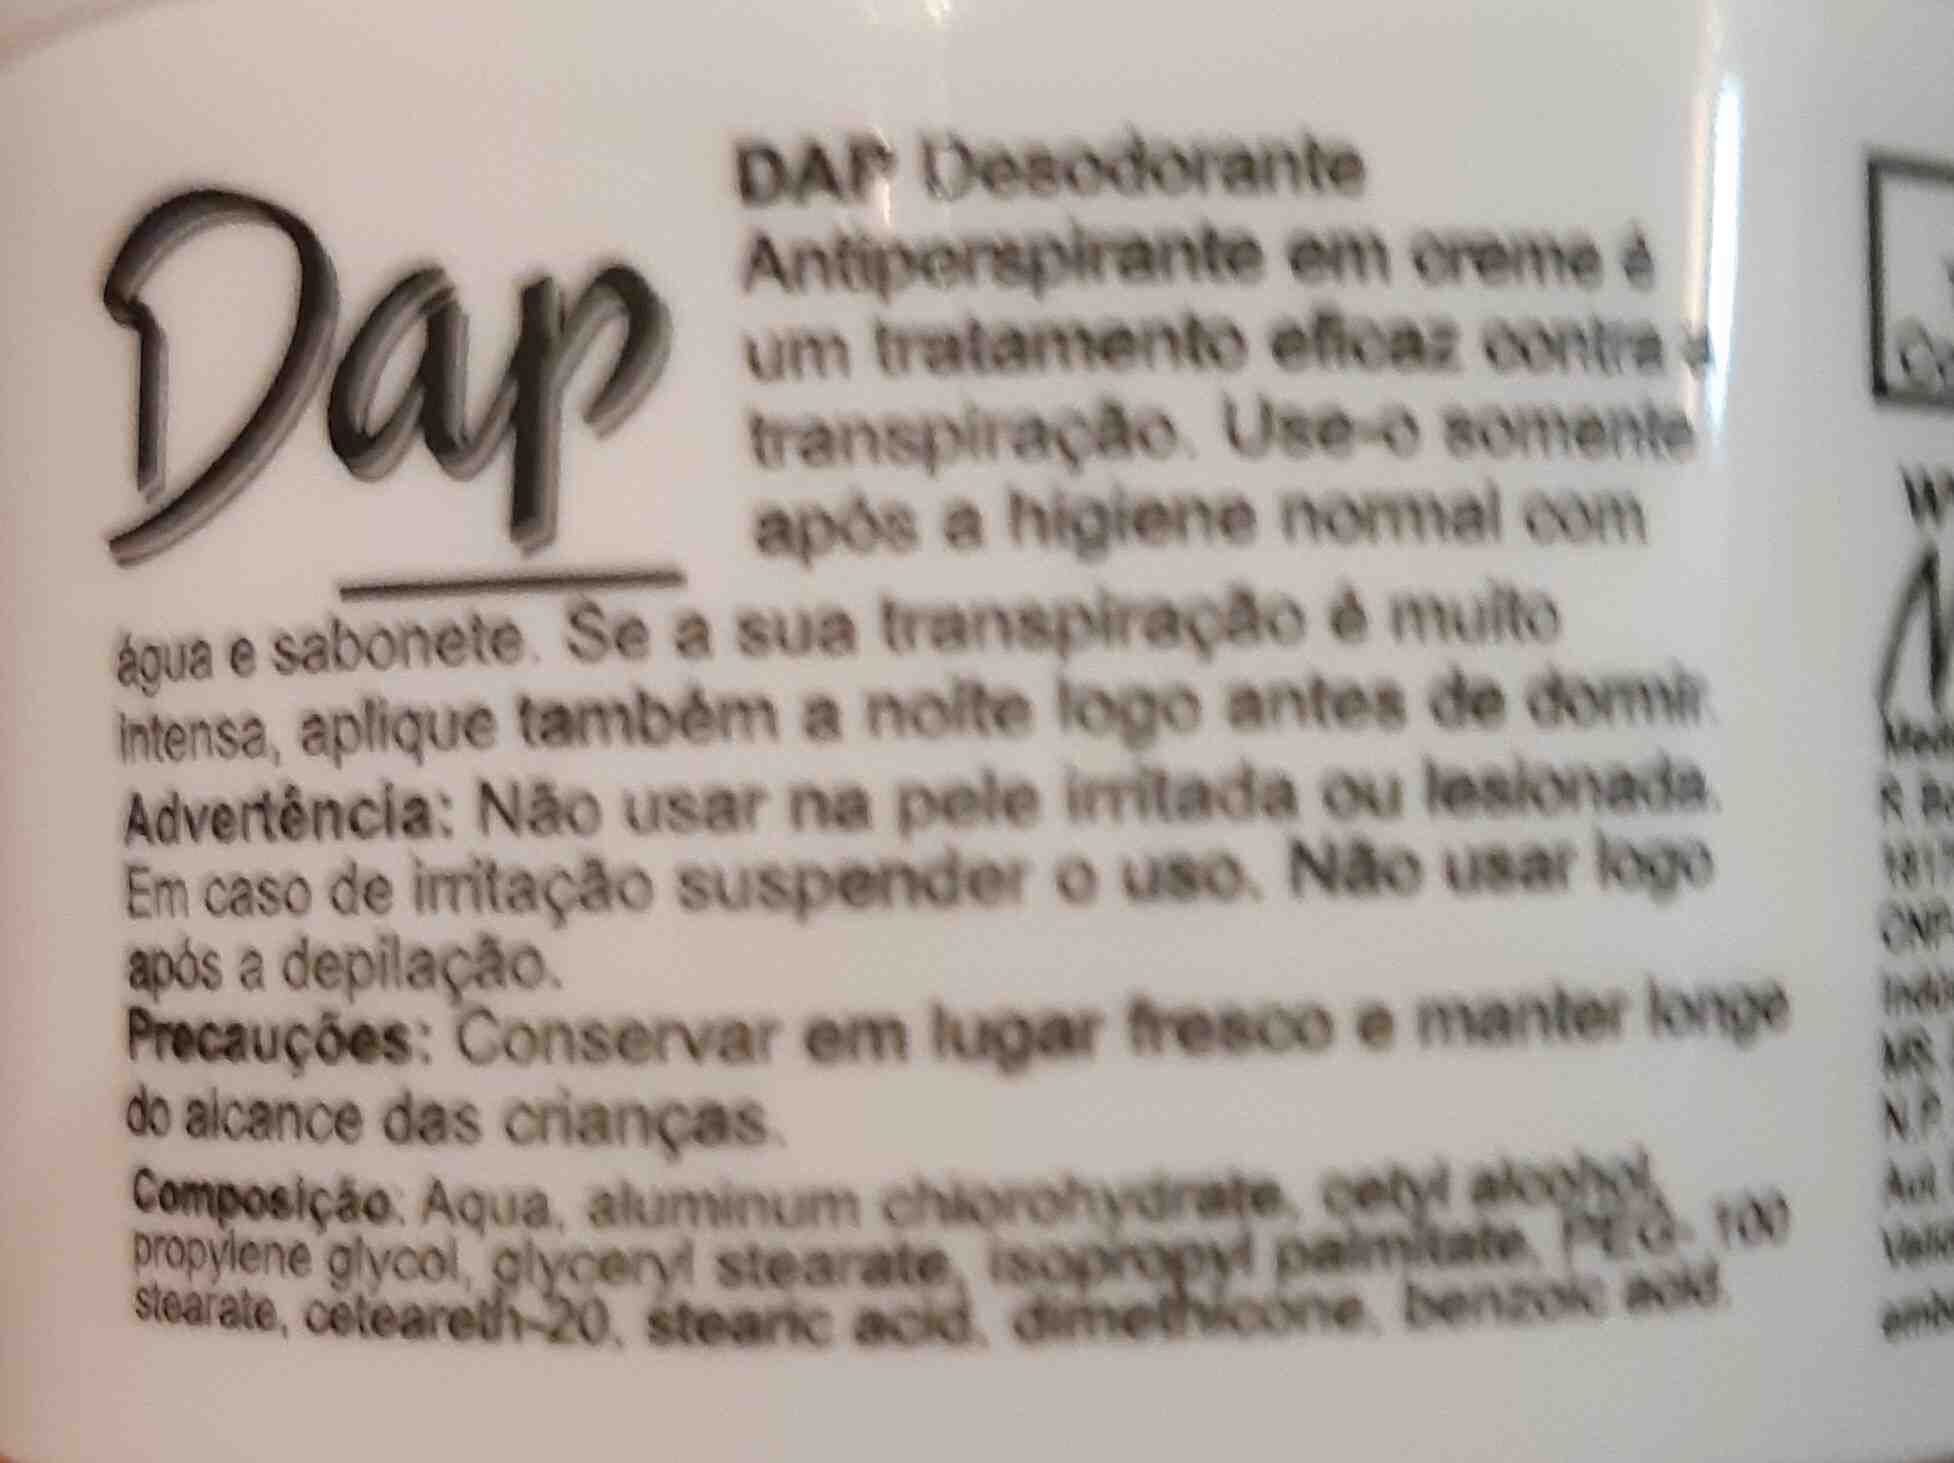 Dap desodorante - Inhaltsstoffe - en